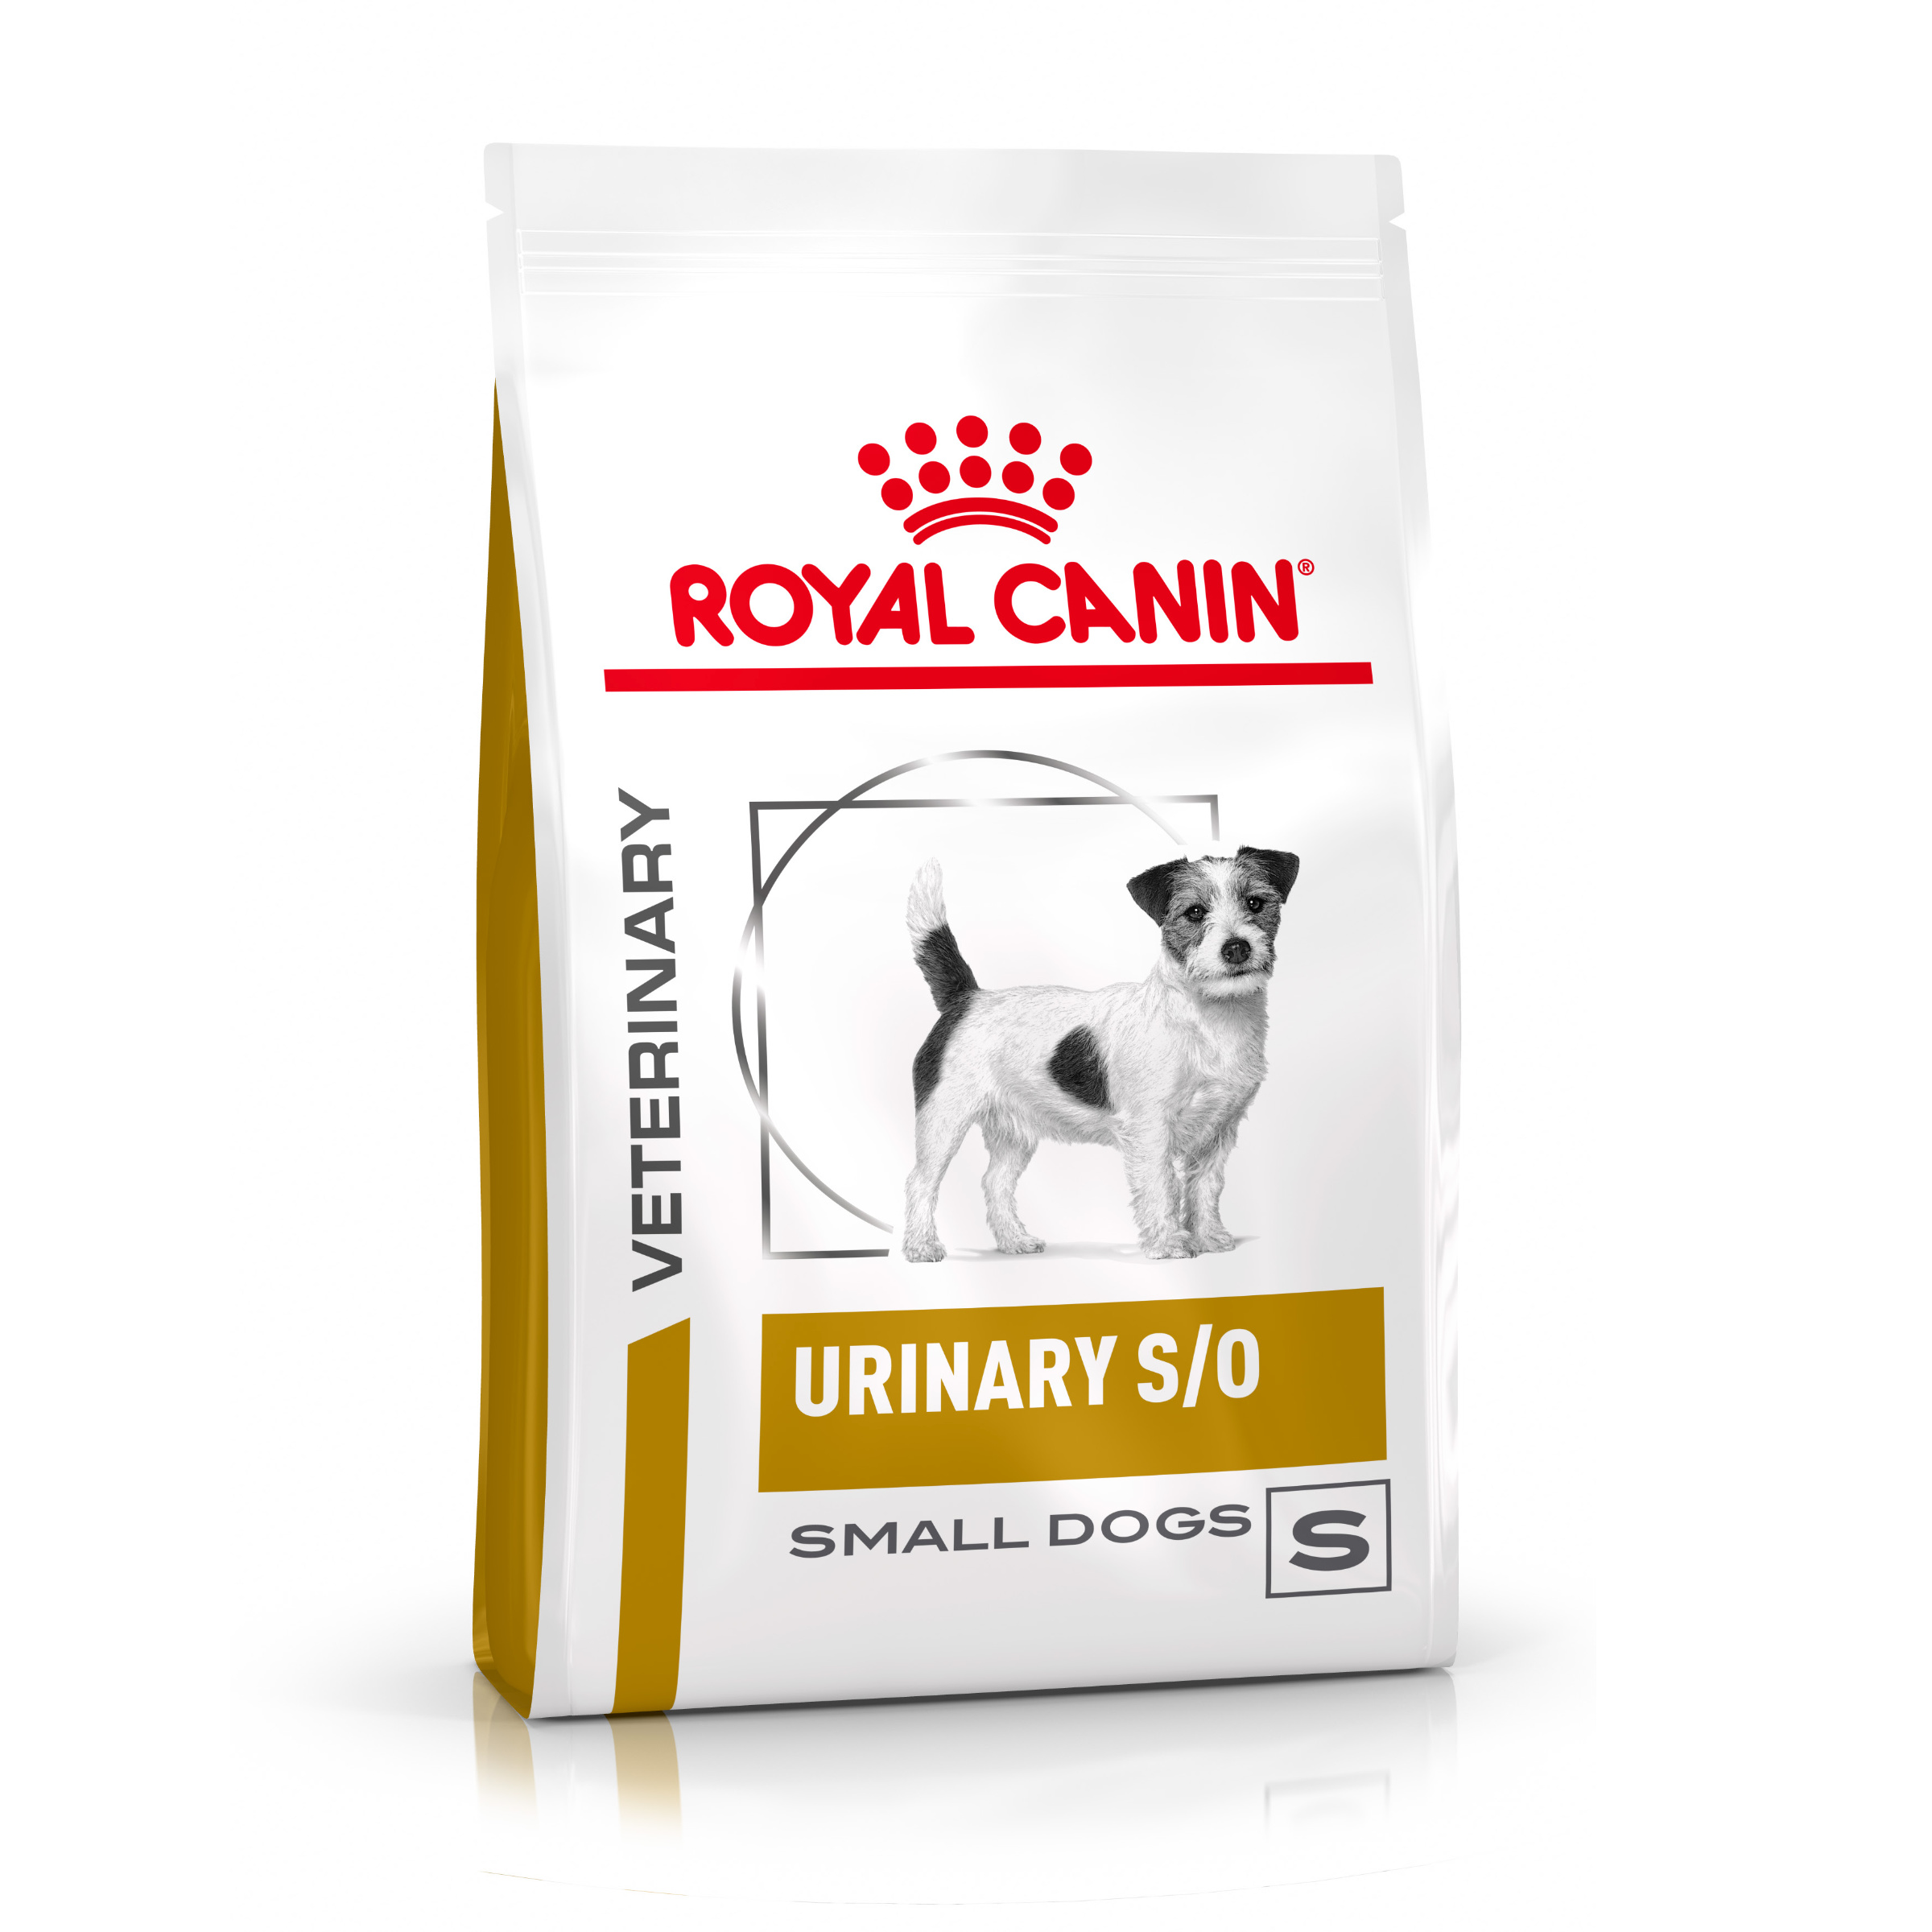 ROYAL CANIN Veterinary URINARY S/O SMALL DOGS Trockenfutter für Hunde 1,5 kg (Hund)